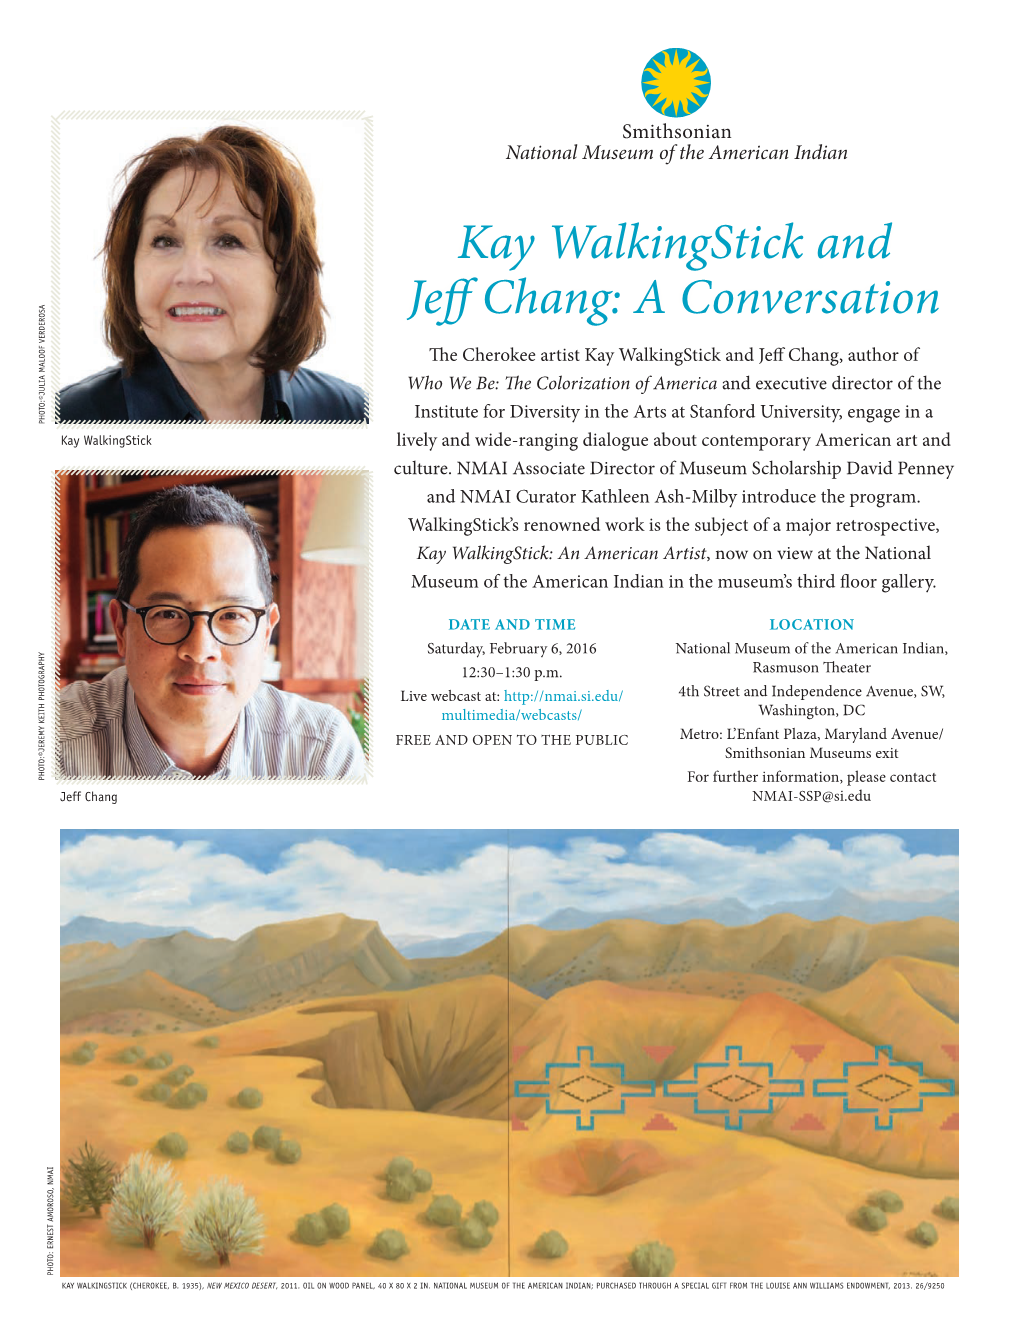 Kay Walkingstick and Jeff Chang: a Conversation